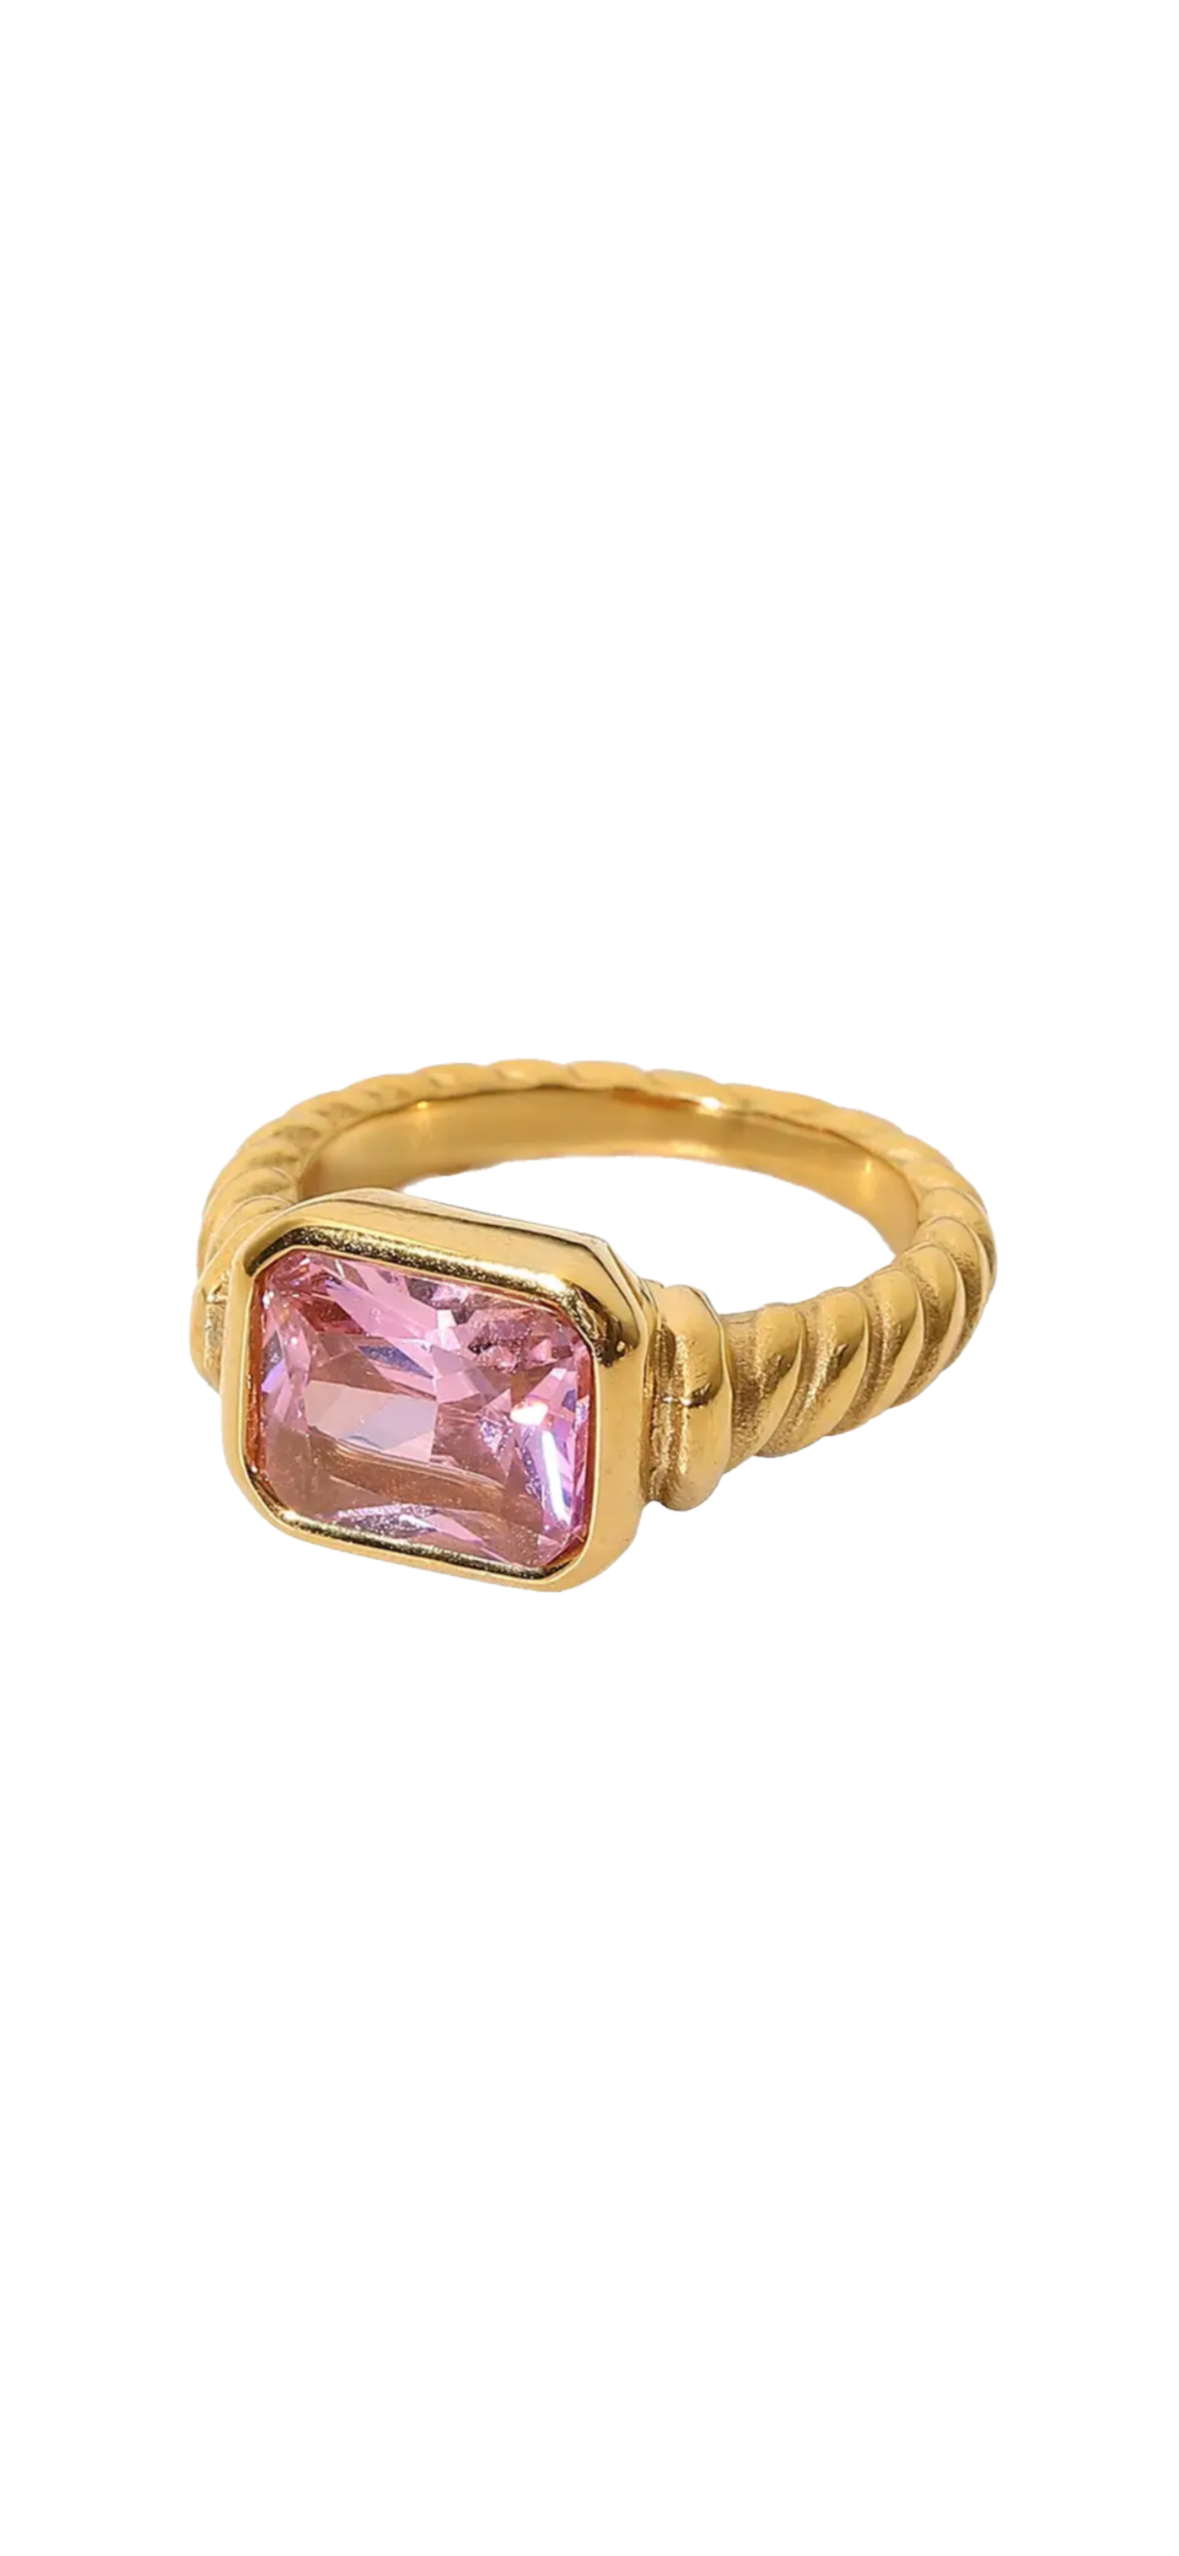 Handmade pink gem set in 18k gold ring 